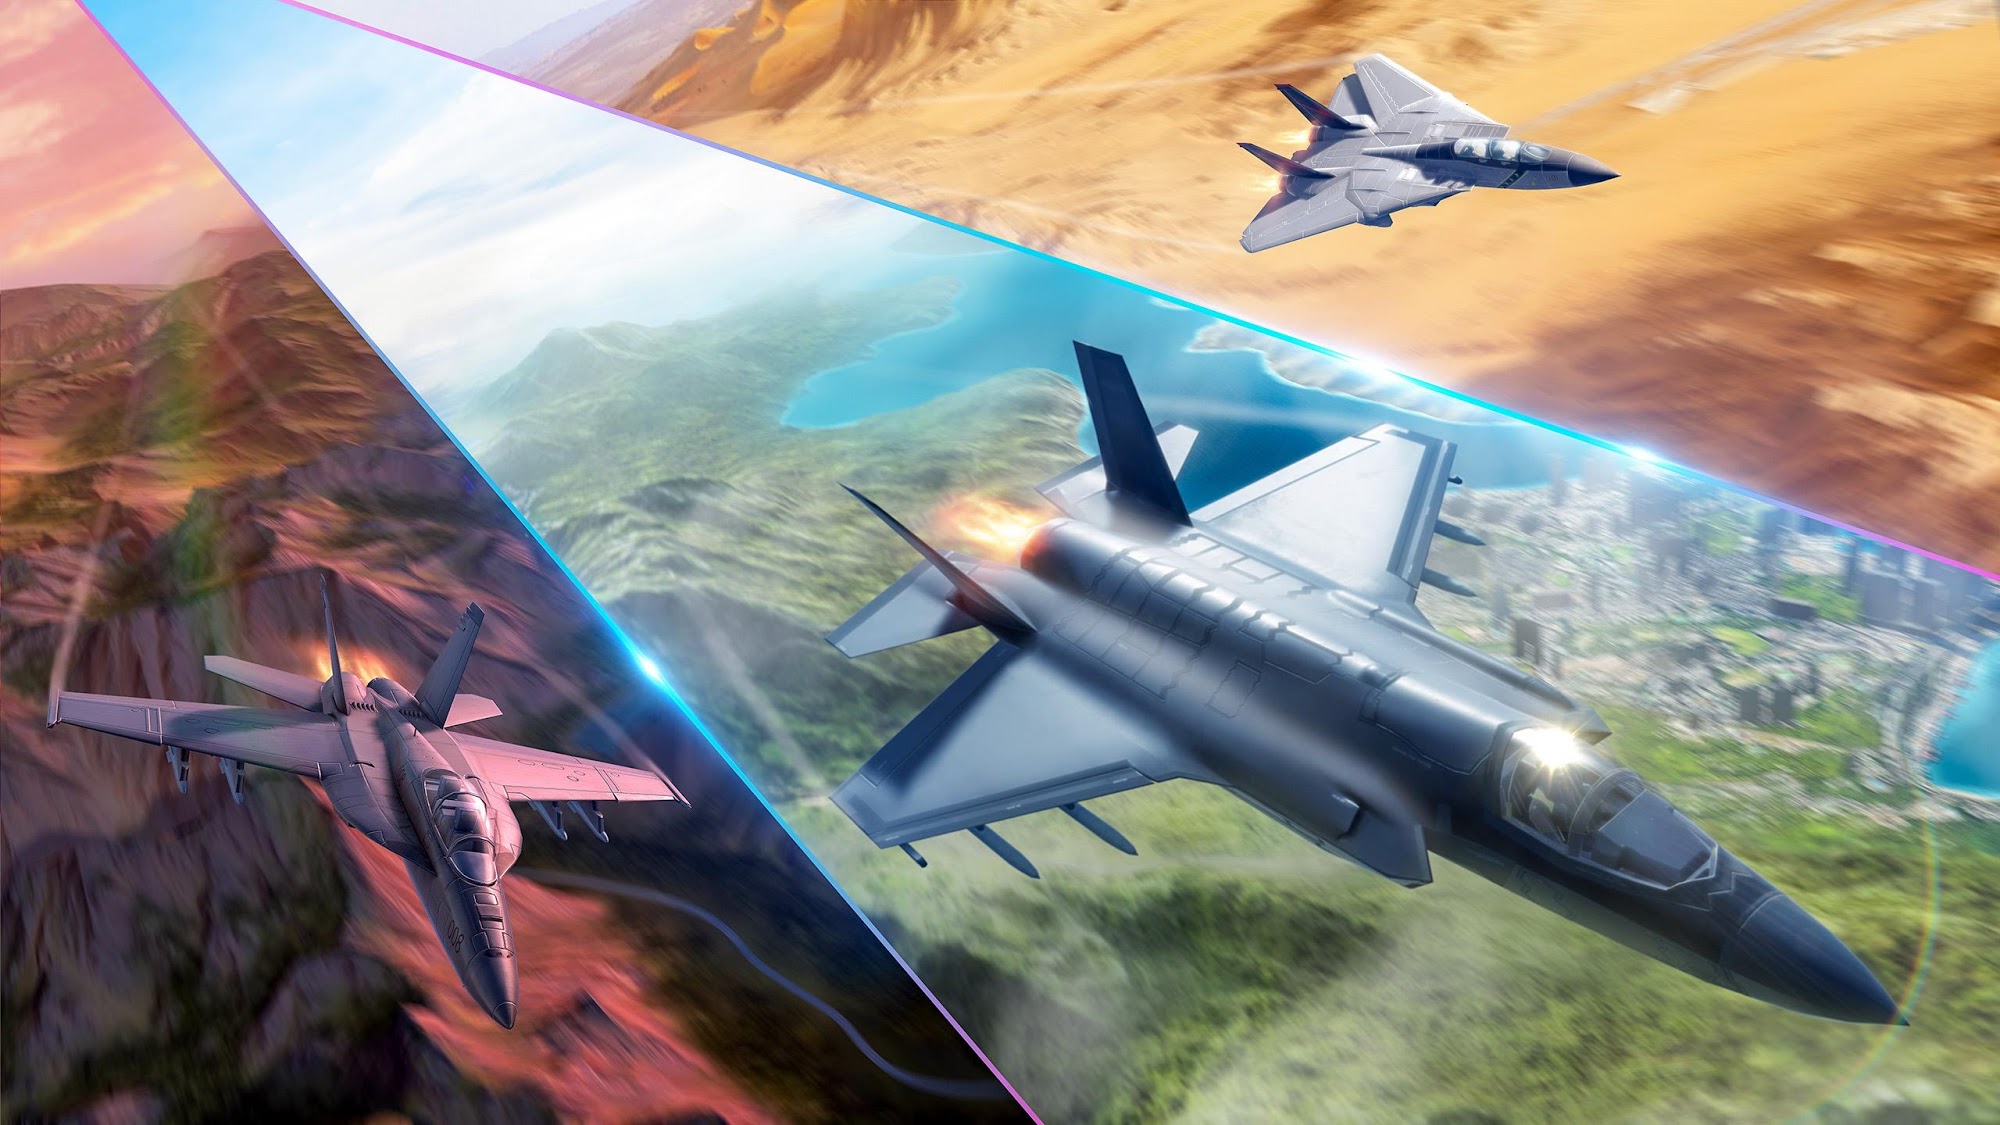 Sky Combat: war planes online simulator PVP screenshot 1